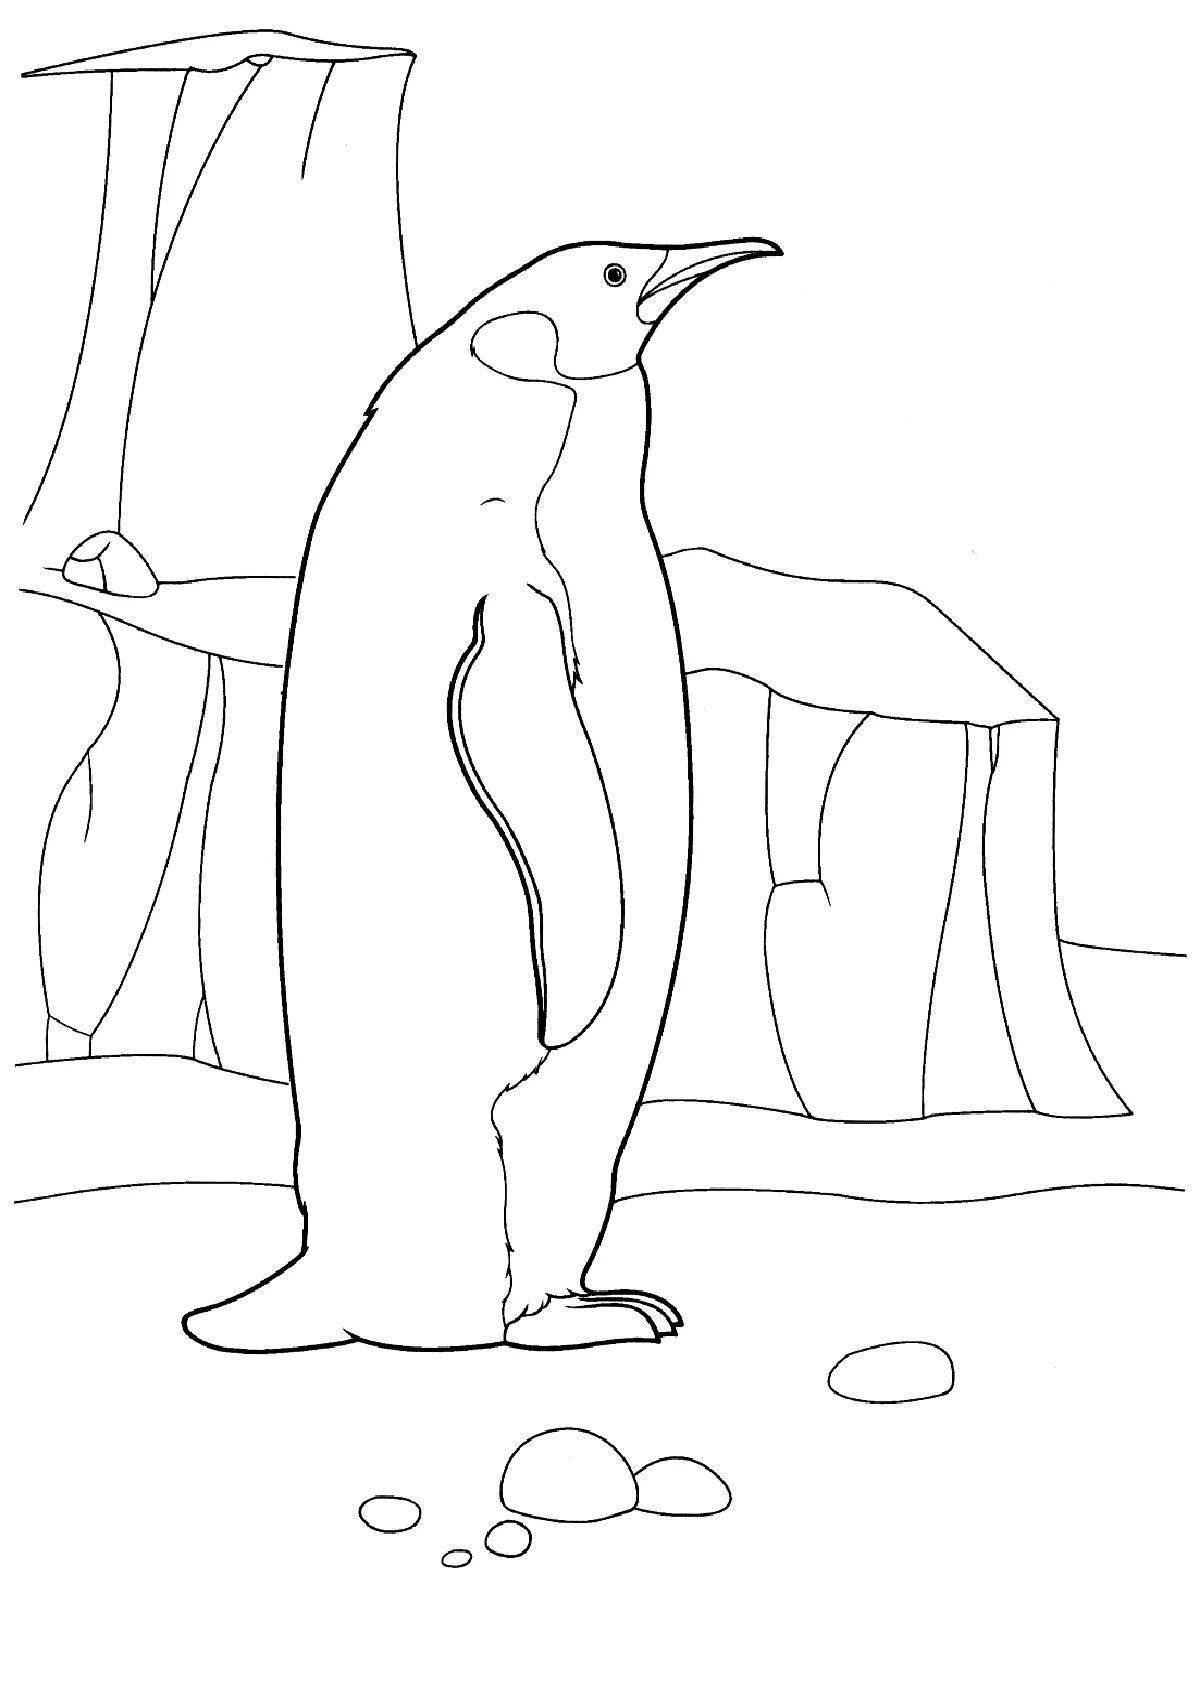 Antarctica's bizarre penguins